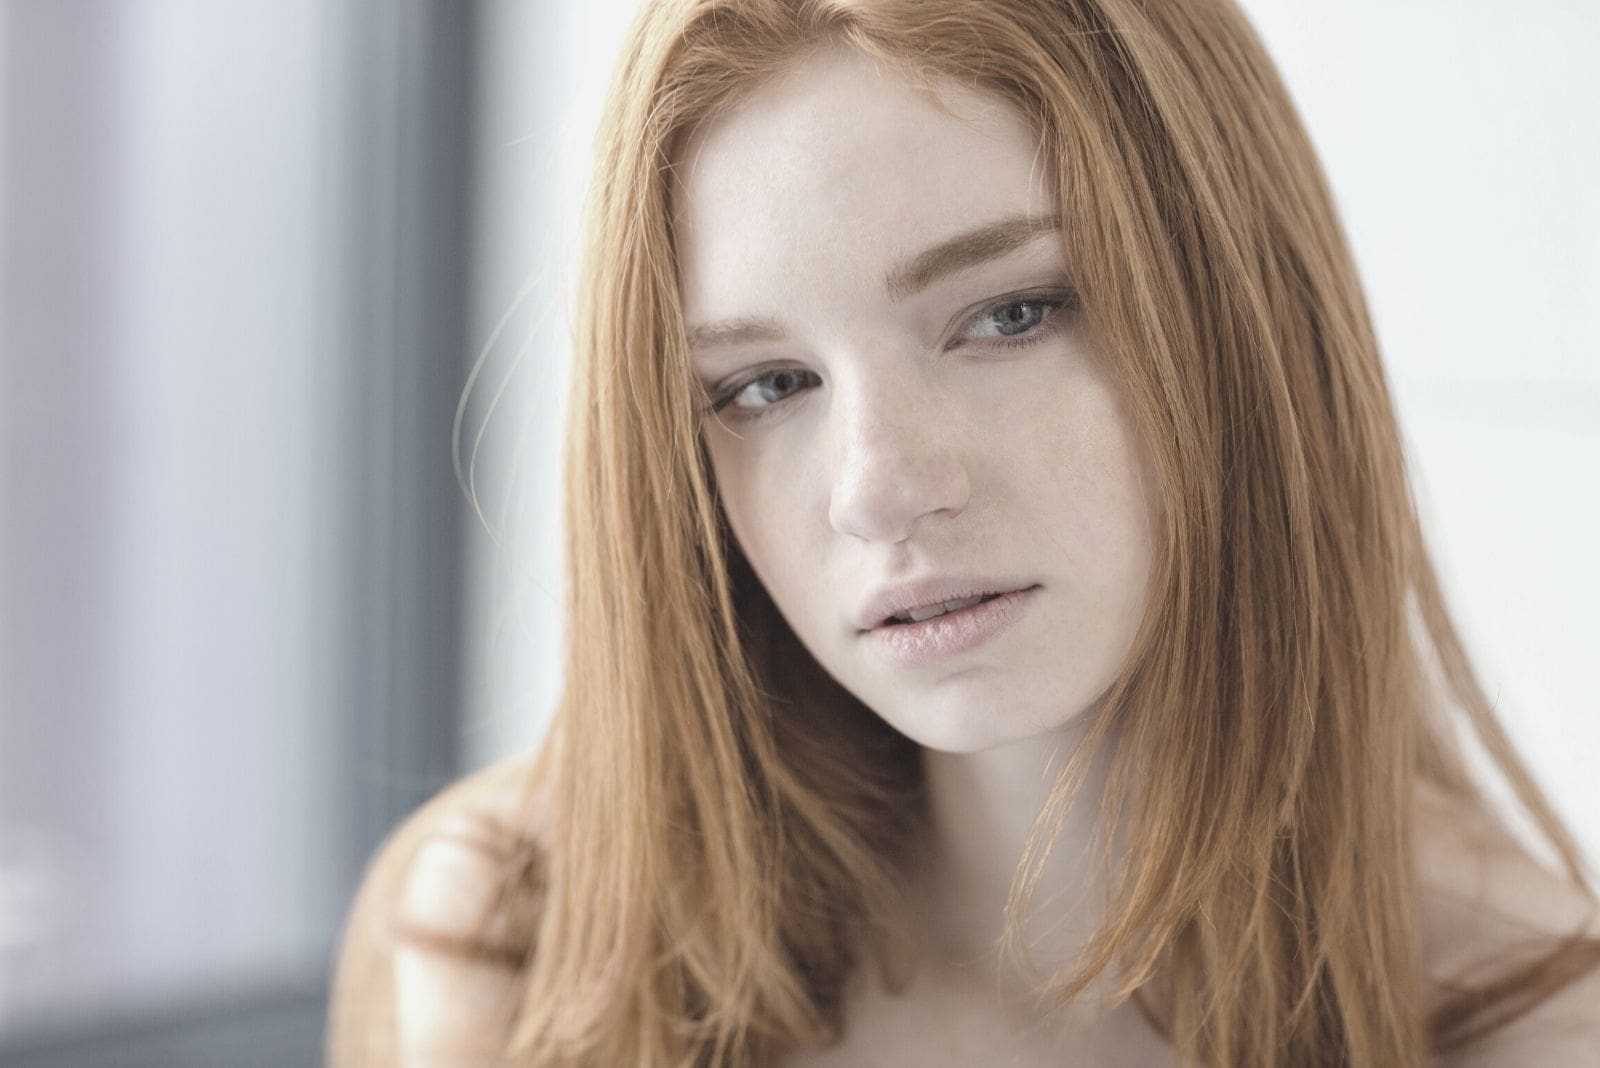 pensive redhead woman looking away in closeup portrait